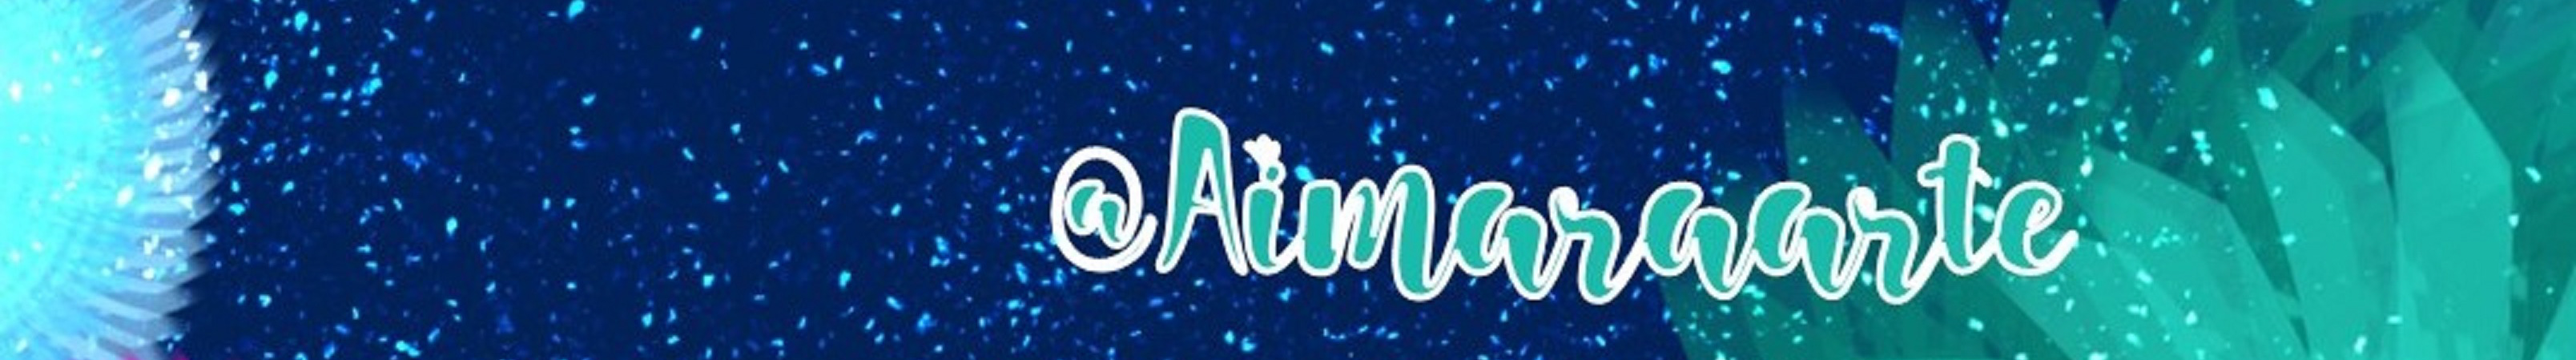 AIMARA SANCHEZ's profile banner